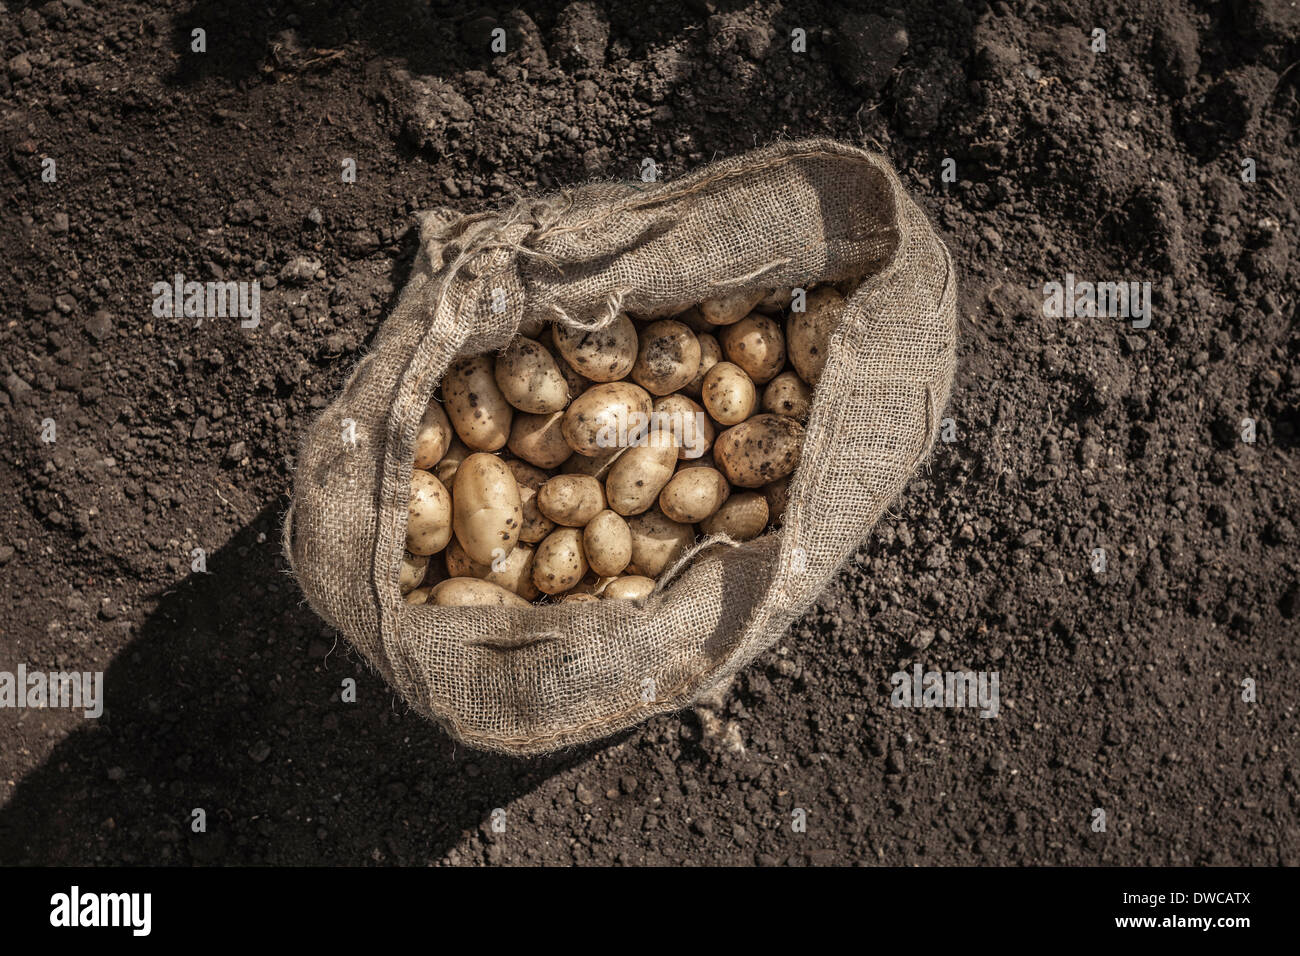 https://c8.alamy.com/comp/DWCATX/sack-of-freshly-harvested-potatoes-DWCATX.jpg